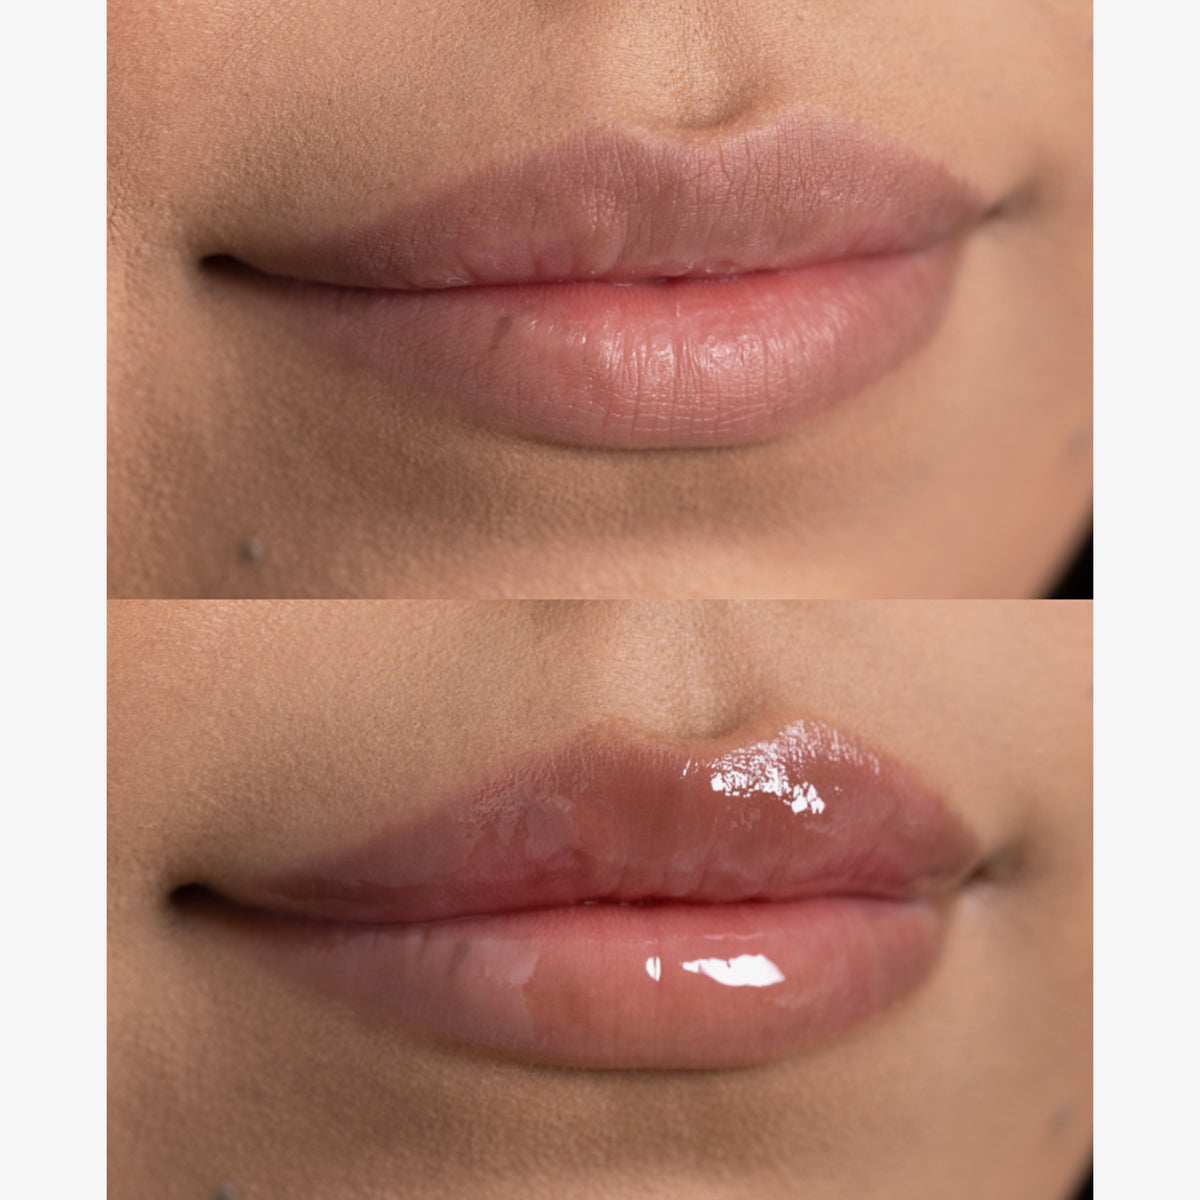 OFRA Cosmetics | Lip Lush Plump